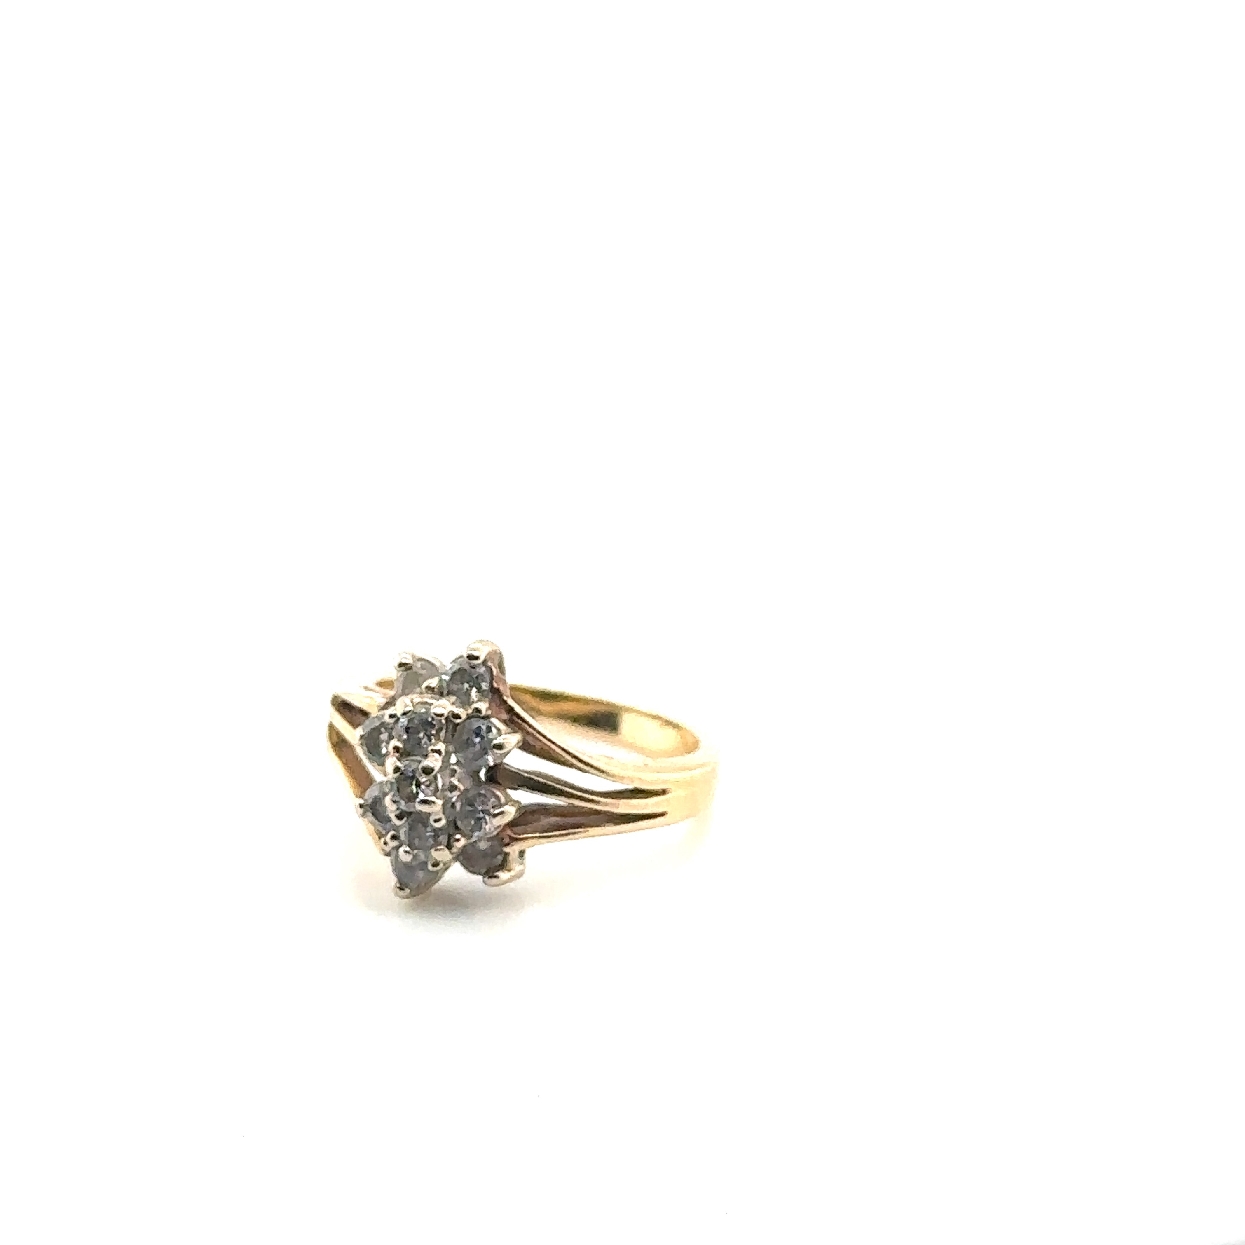 14K Yellow Gold Diamond Ring 
0.5ct

Size 4.25